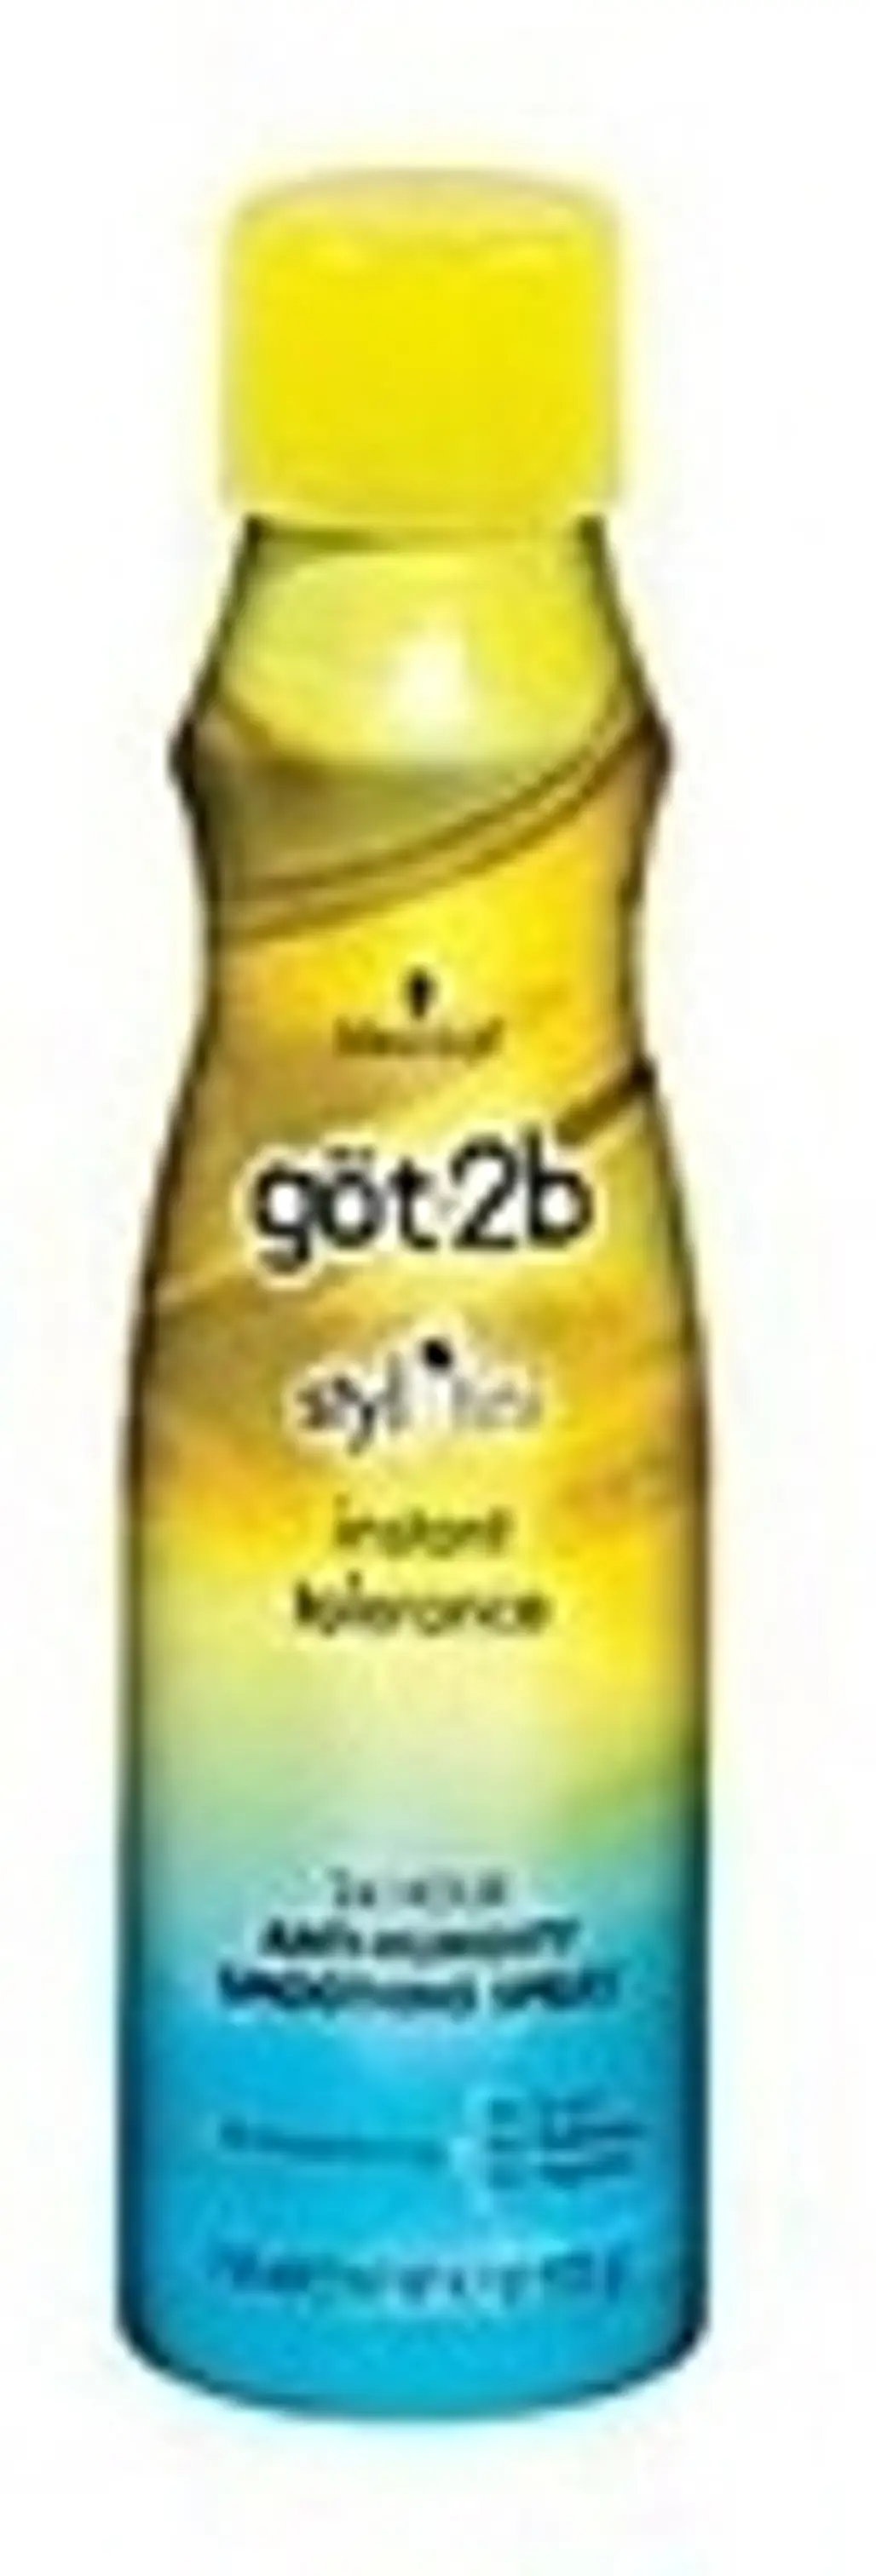 Got2b Styltini Instant Tolerance anti-Humidity Smoothing Spray